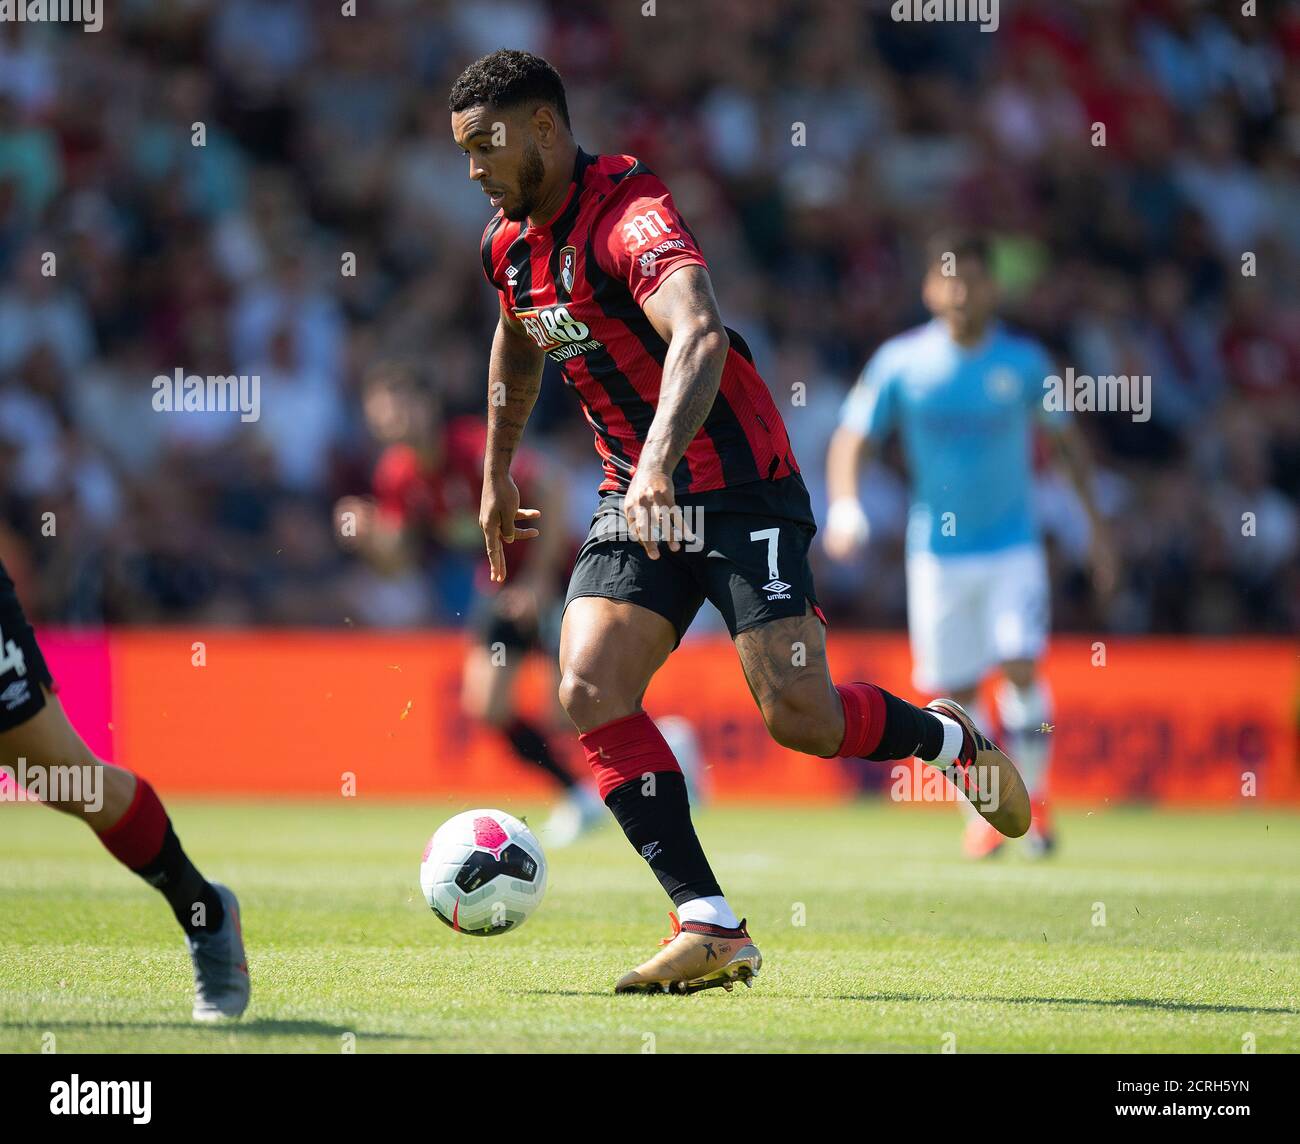 AFC Bournemouth's Joshua King PHOTO CREDIT : © MARK PAIN / ALAMY STOCK PHOTO Foto Stock